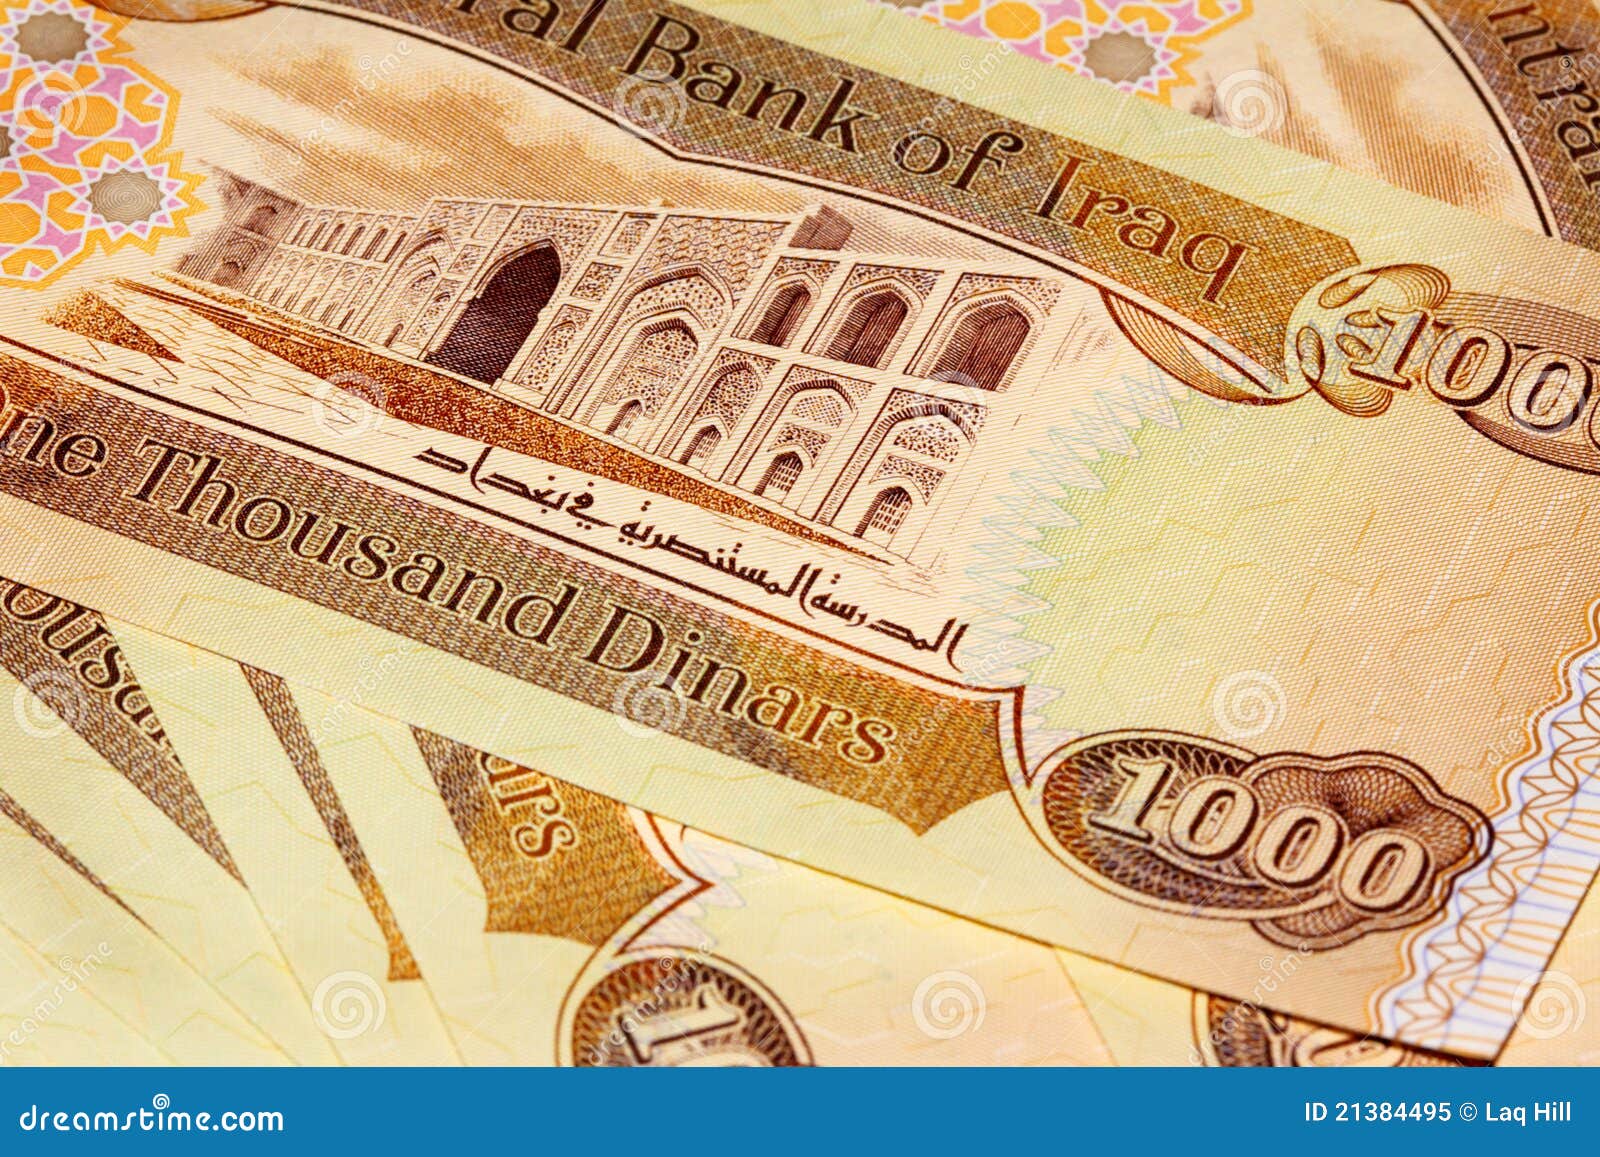 iraq 1000 dinar note cbi